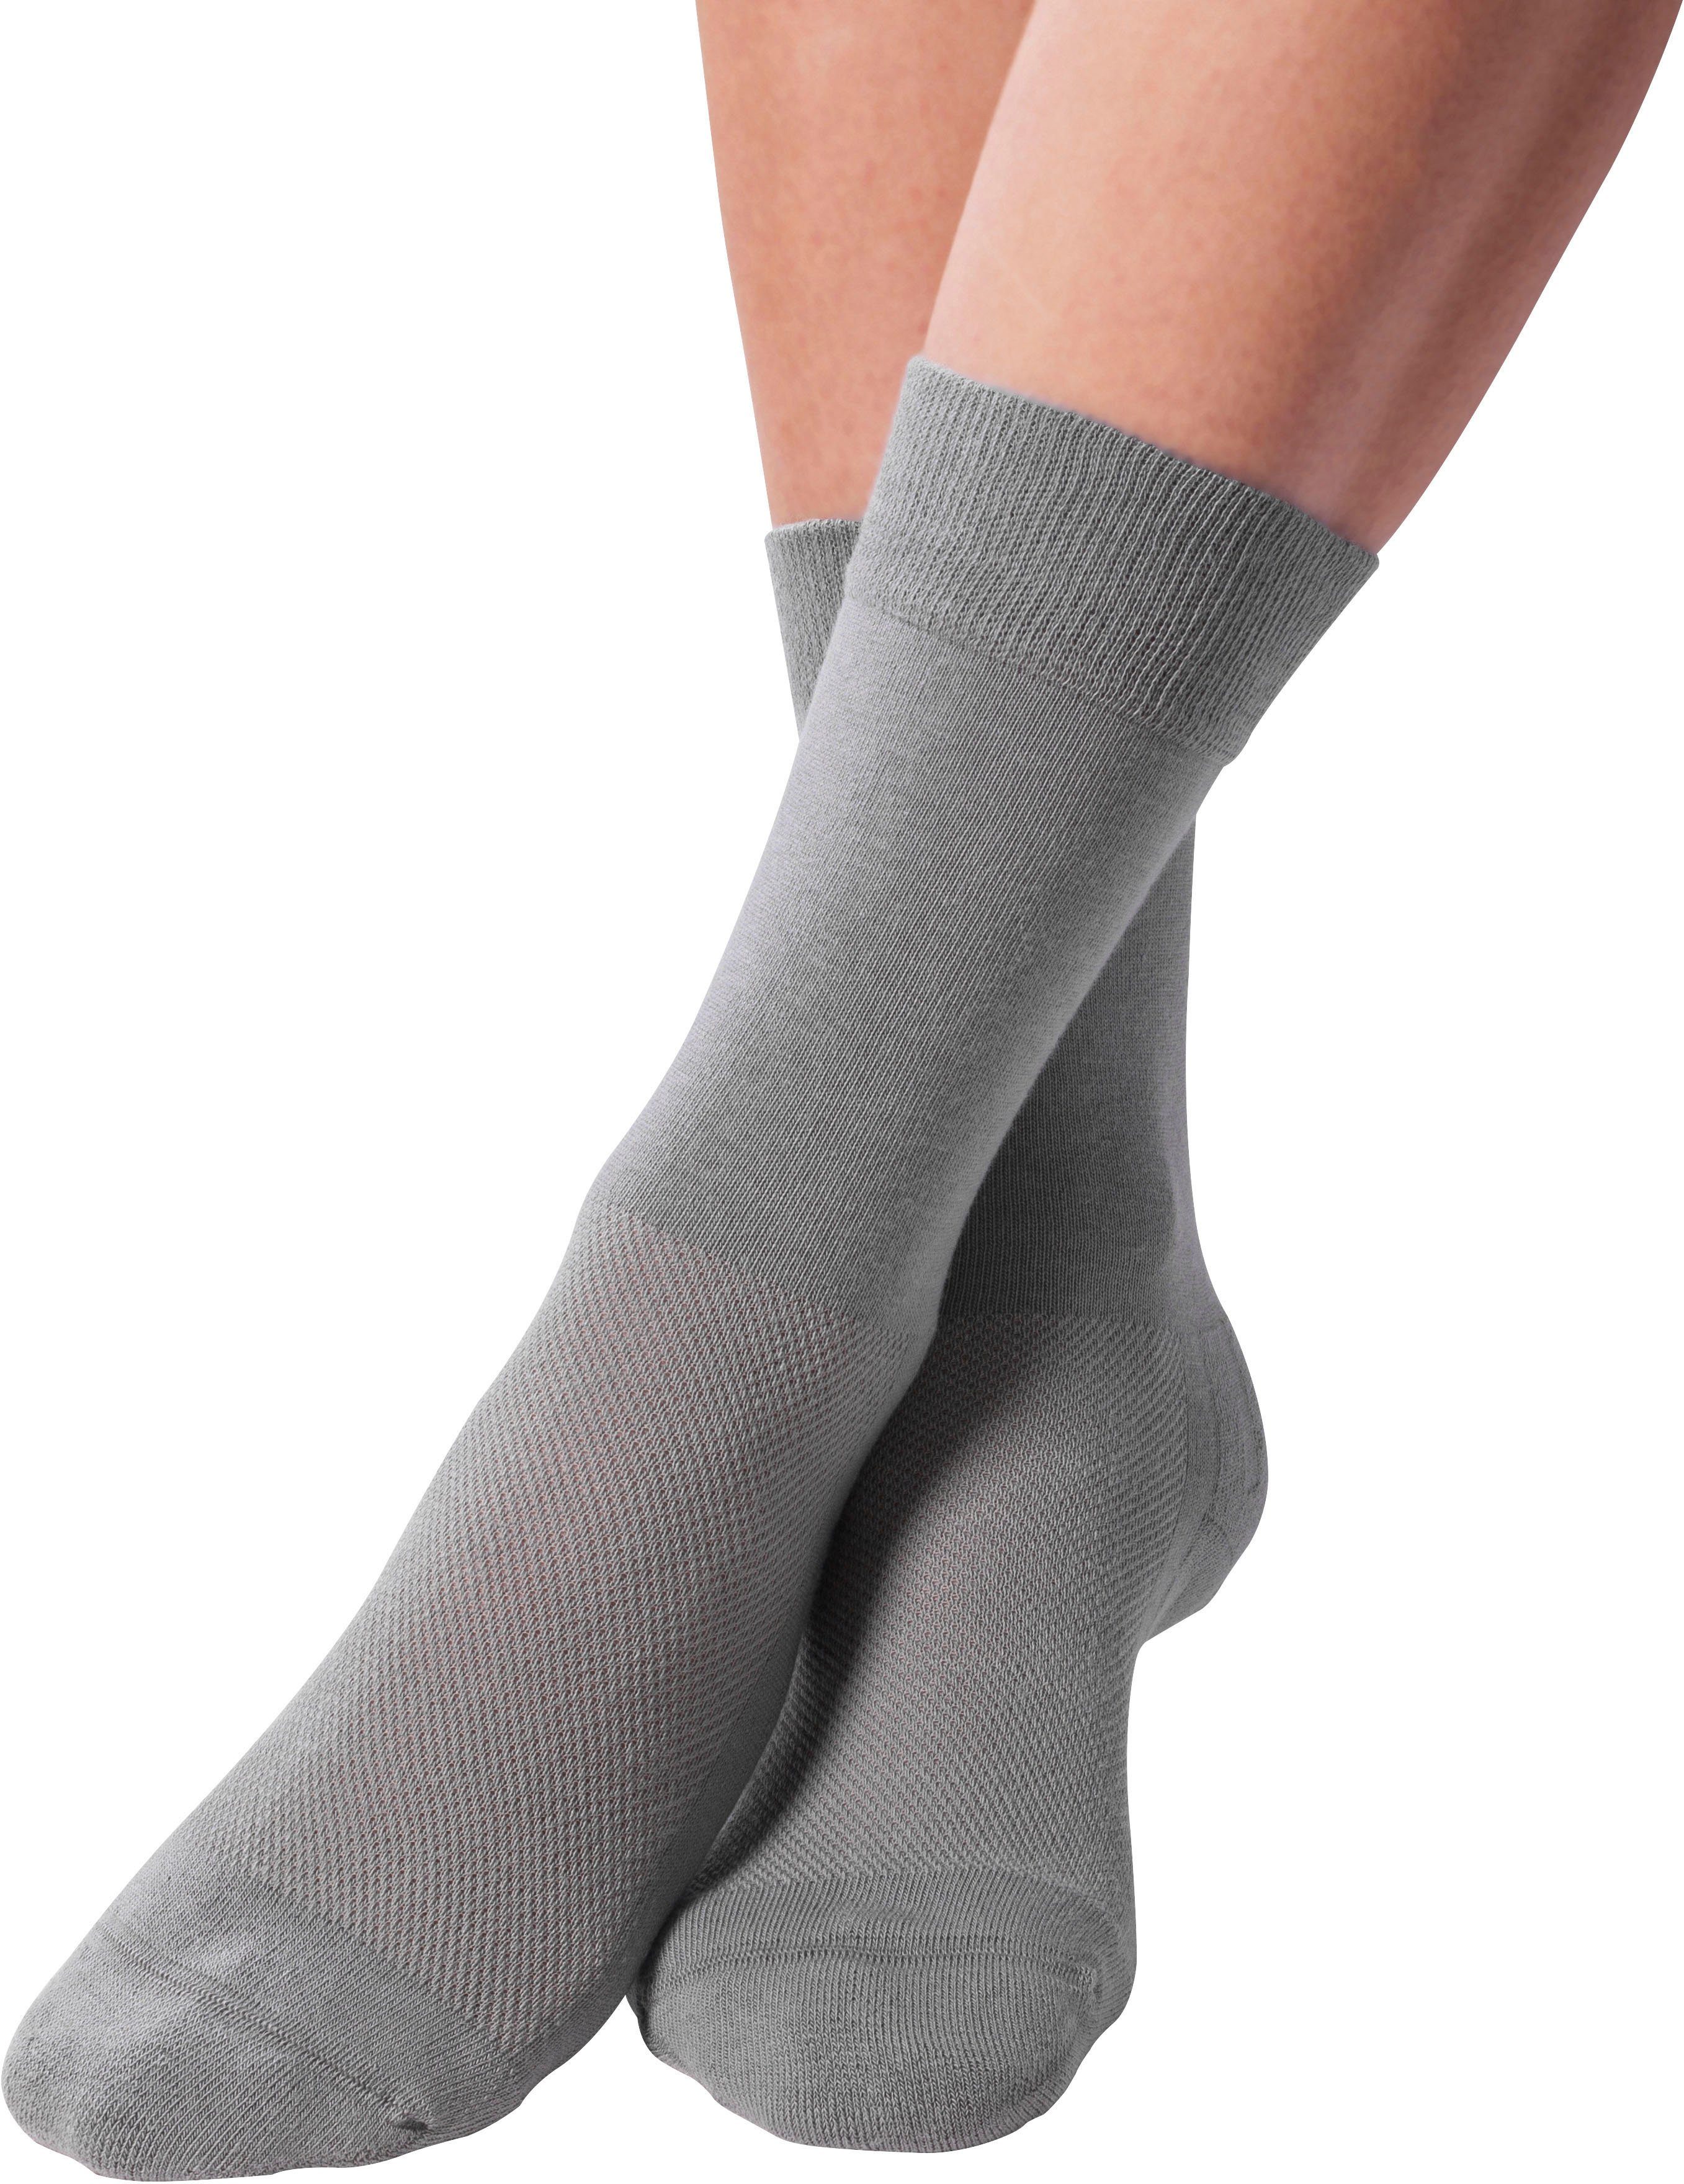 Fußgut Diabetikersocken Venenfeund Sensitiv grau Socken (2-Paar)